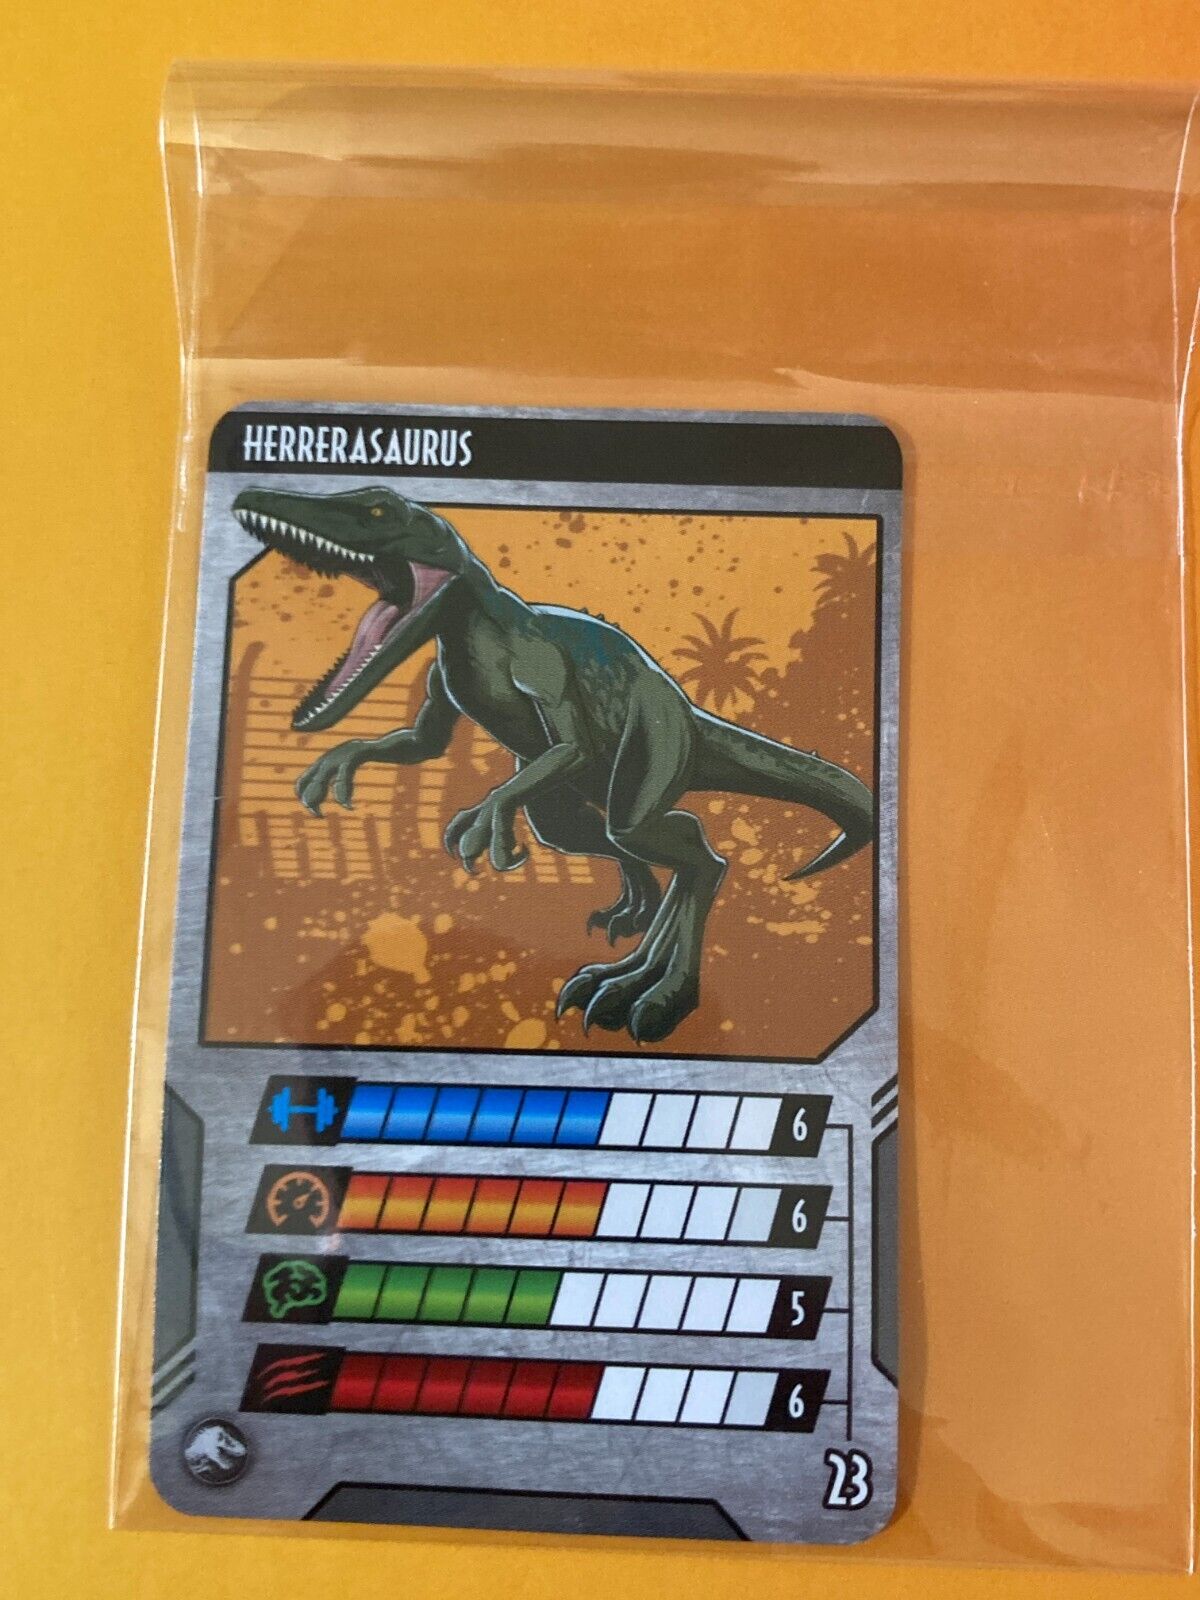 2017 Mattel Jurassic World Trading Card Herrerasaurus #23